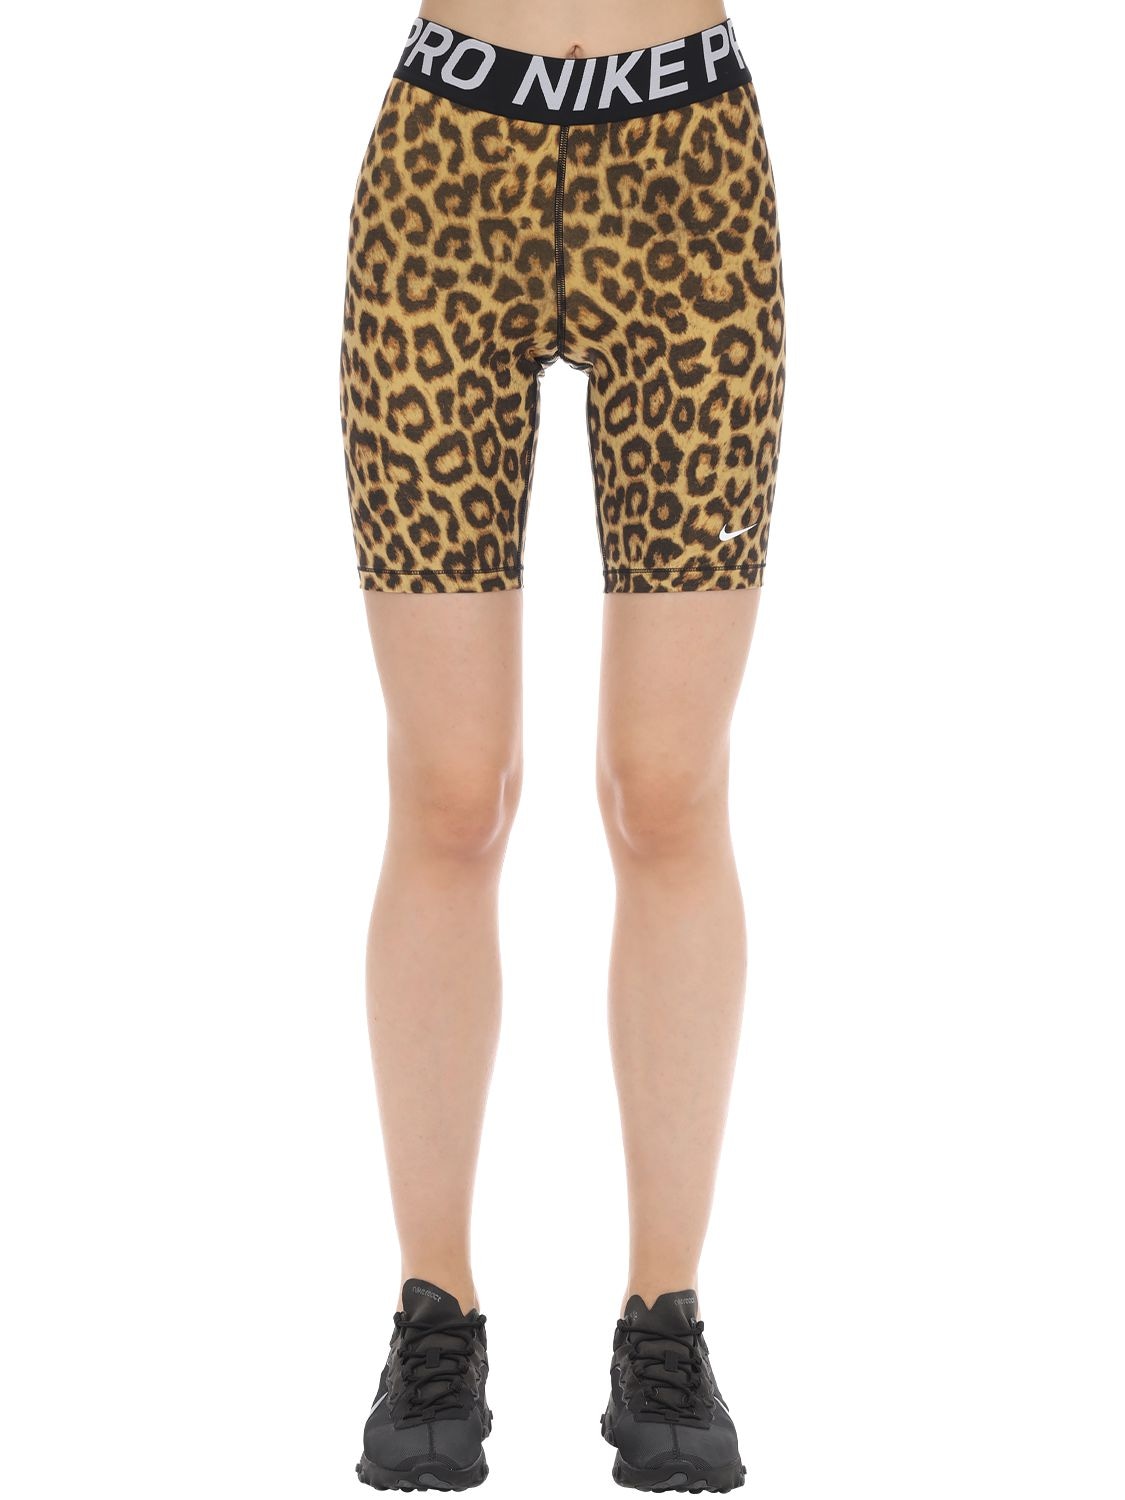 nike shorts leopard print